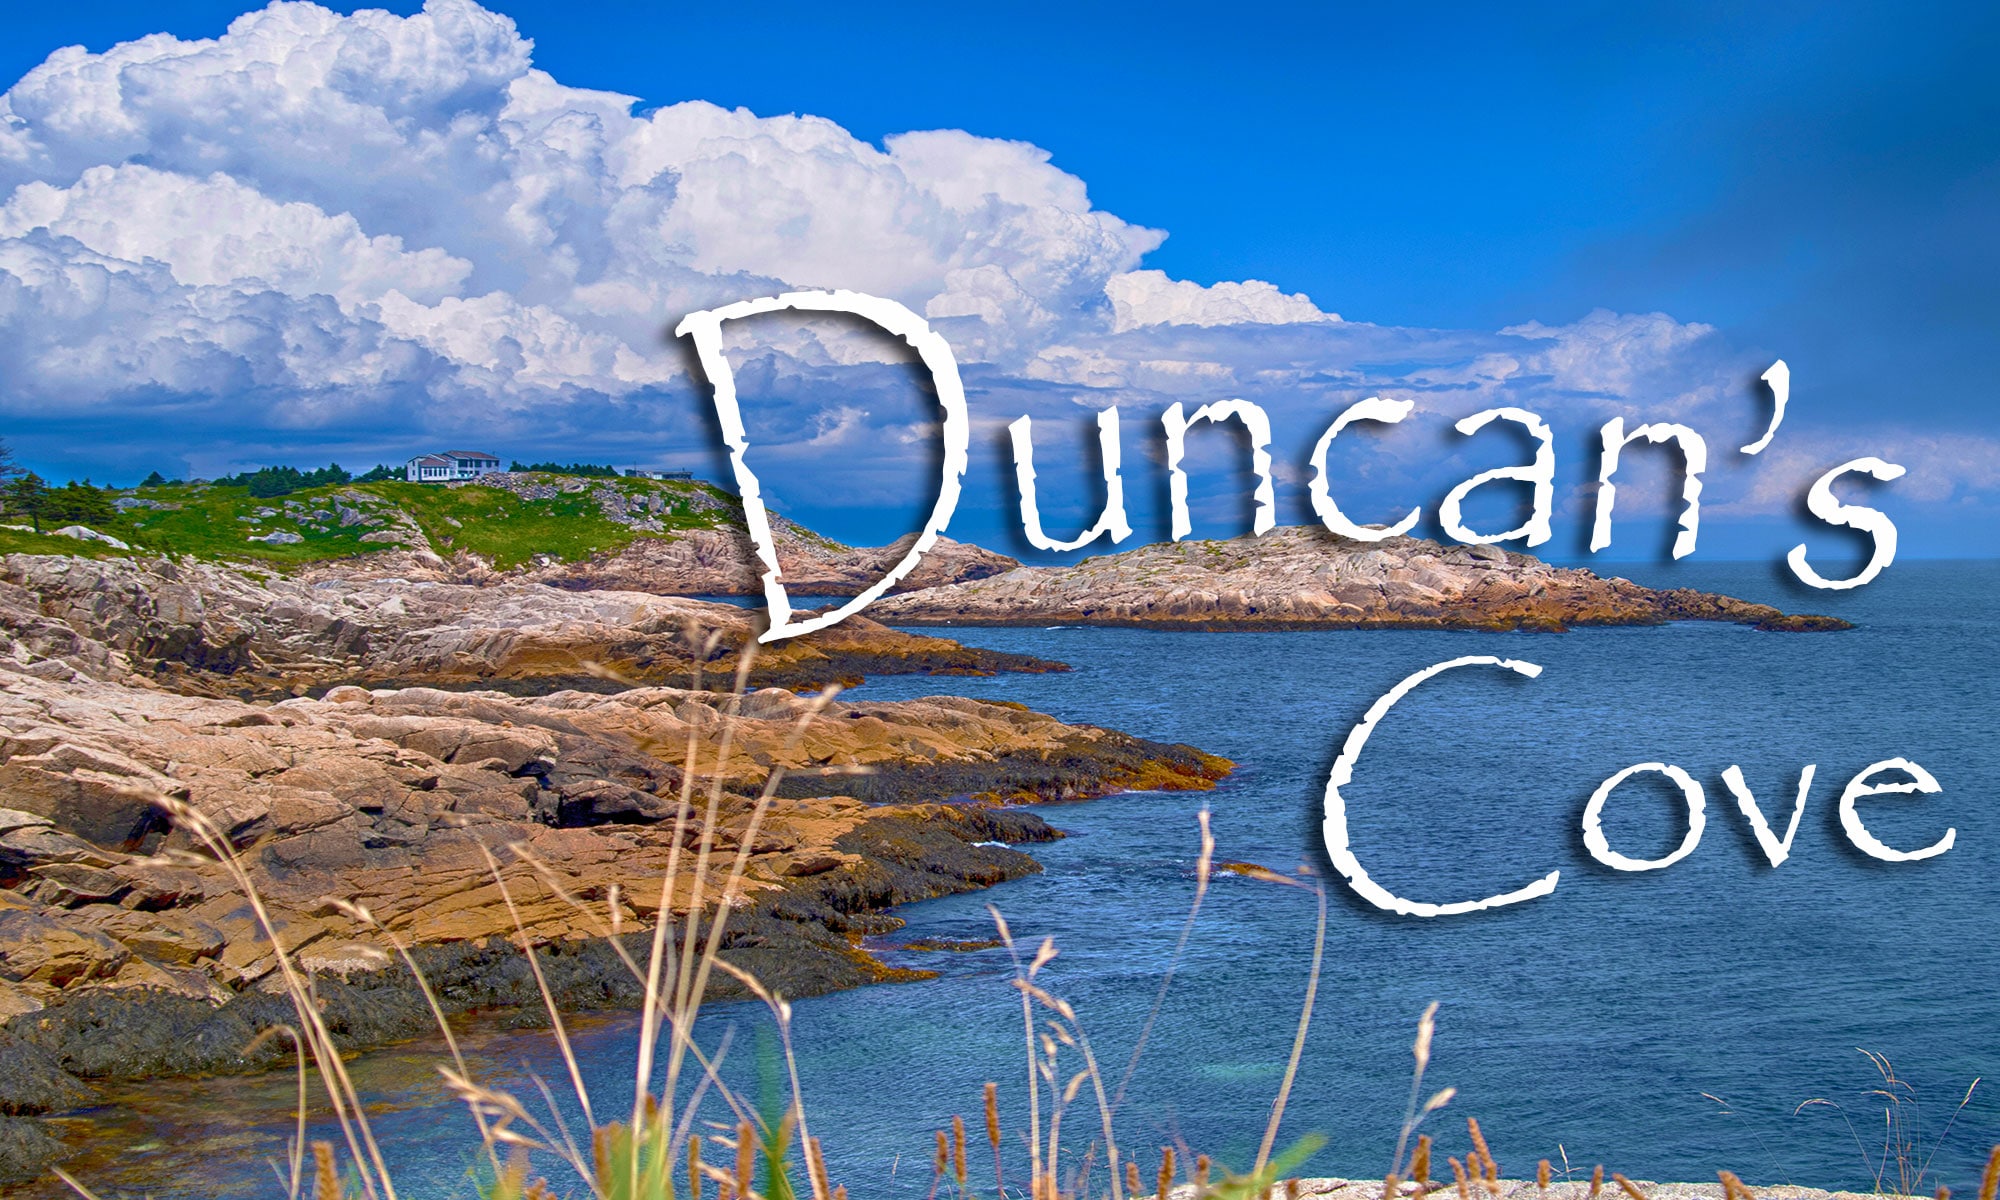 Duncan's Cove Photos